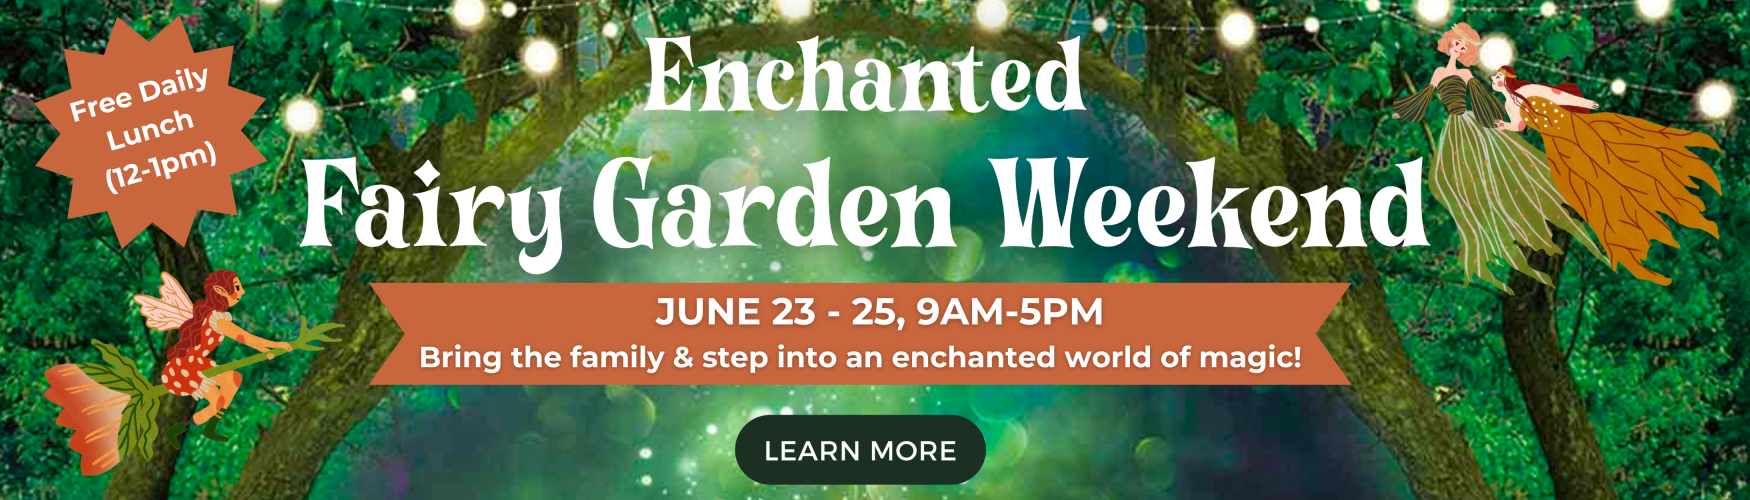 cnf-enchanted-fairy-garden-weekend_web-header-23